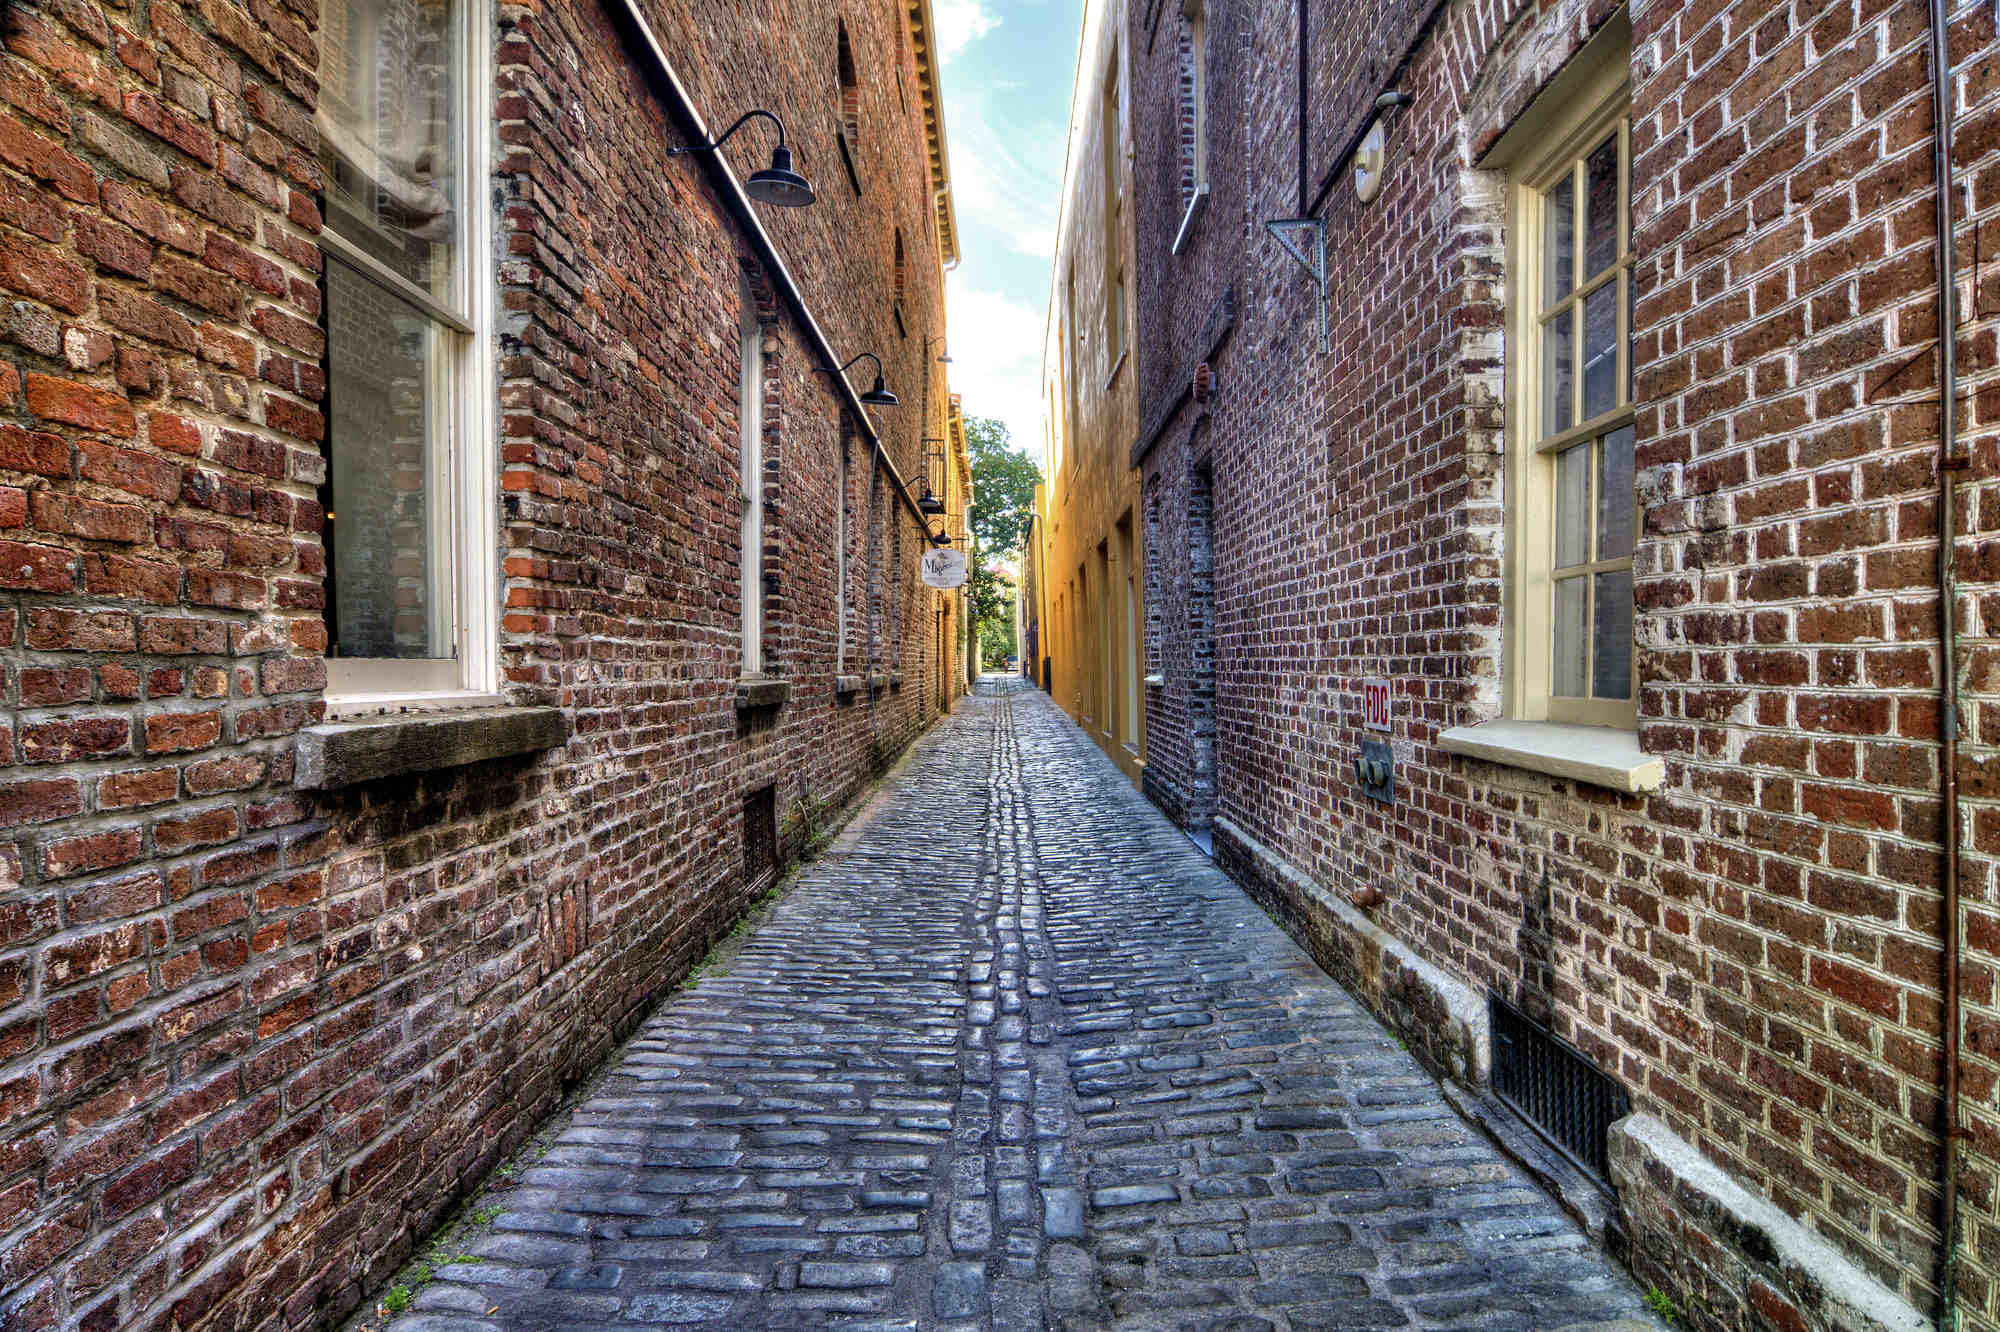 A narrow brick alleyway between two brick buildings in downtown Charleston, South Carolina.